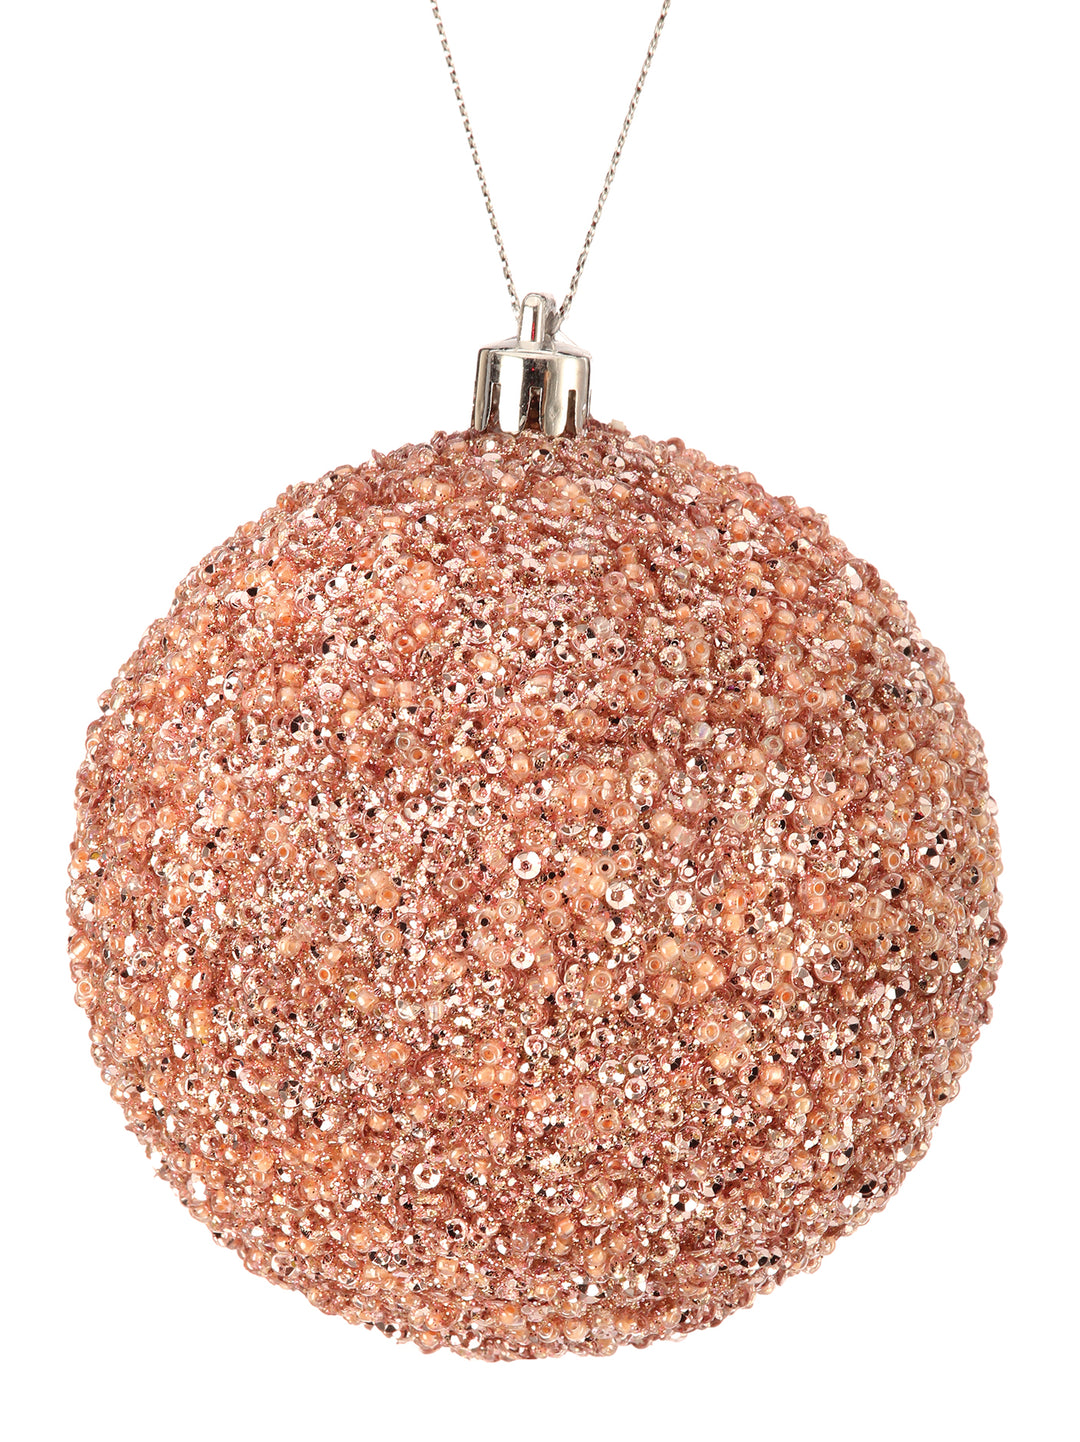 Regency 4.5" light Pink Glitter Sequin Iced Ball Ornament